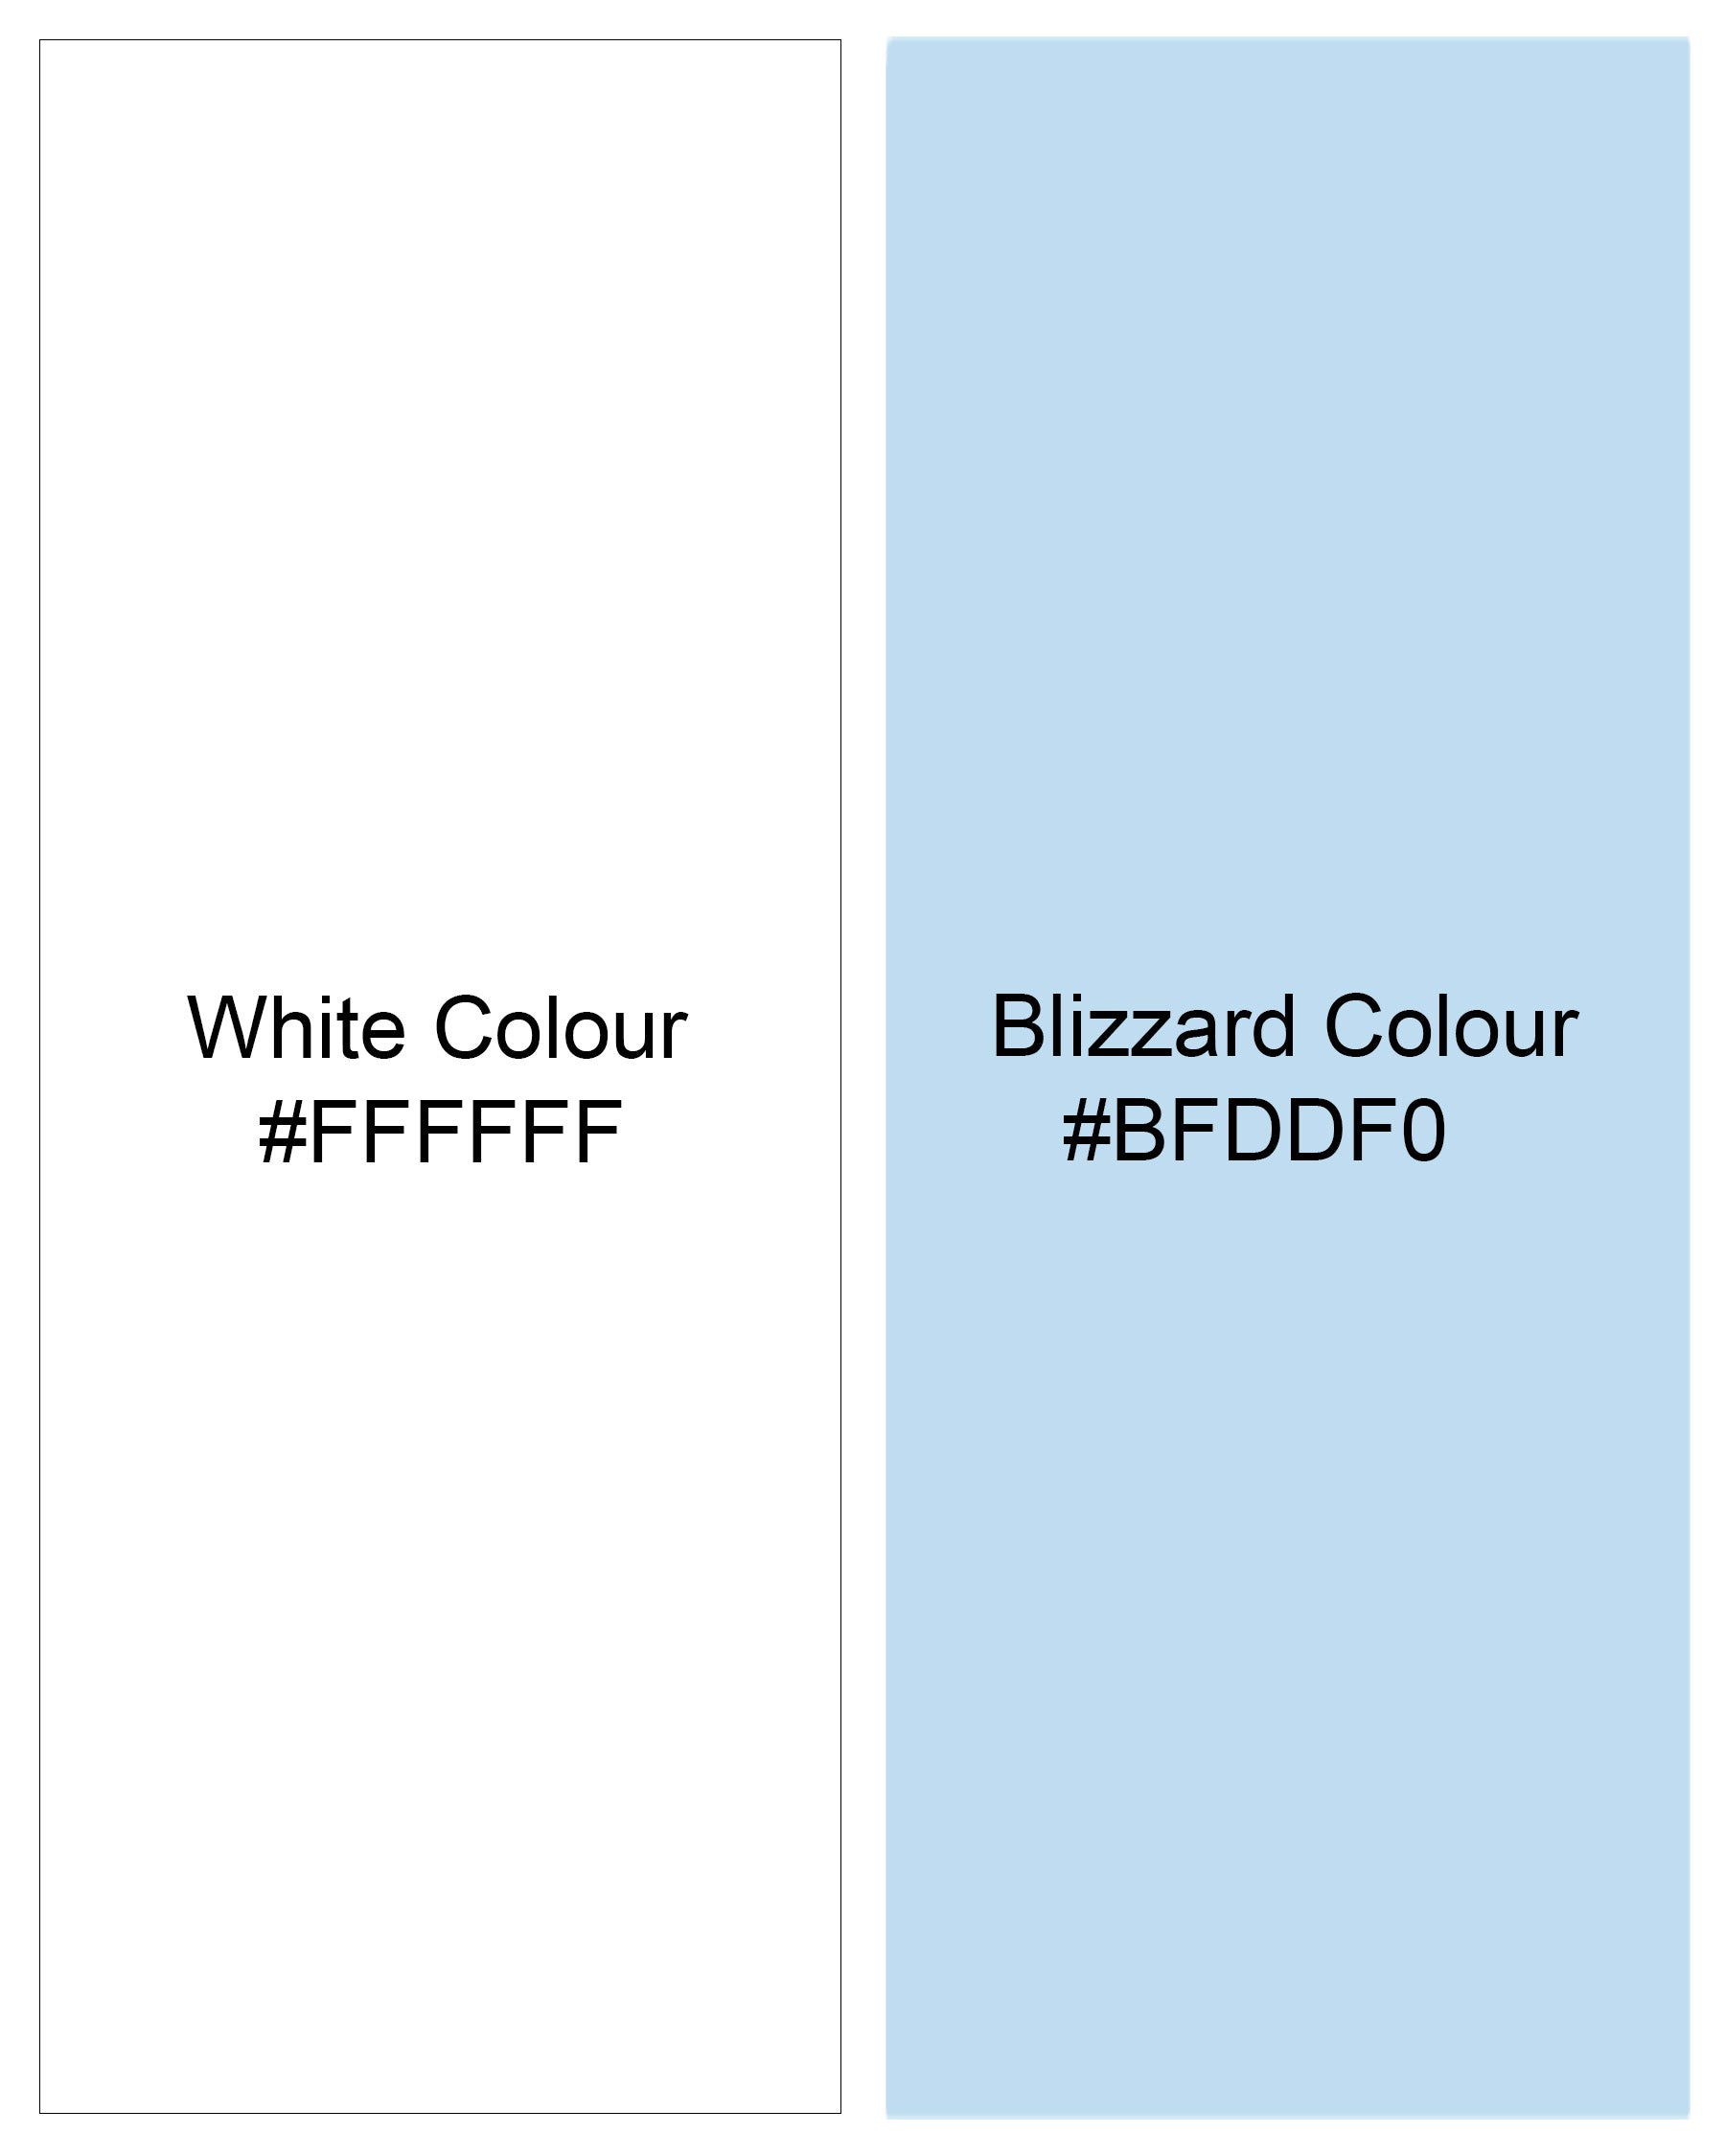 Bright White and Blizzard Blue Striped Premium Cotton Kurta Shirt 8140-KS-38, 8140-KS-H-38, 8140-KS-39, 8140-KS-H-39, 8140-KS-40, 8140-KS-H-40, 8140-KS-42, 8140-KS-H-42, 8140-KS-44, 8140-KS-H-44, 8140-KS-46, 8140-KS-H-46, 8140-KS-48, 8140-KS-H-48, 8140-KS-50, 8140-KS-H-50, 8140-KS-52, 8140-KS-H-52